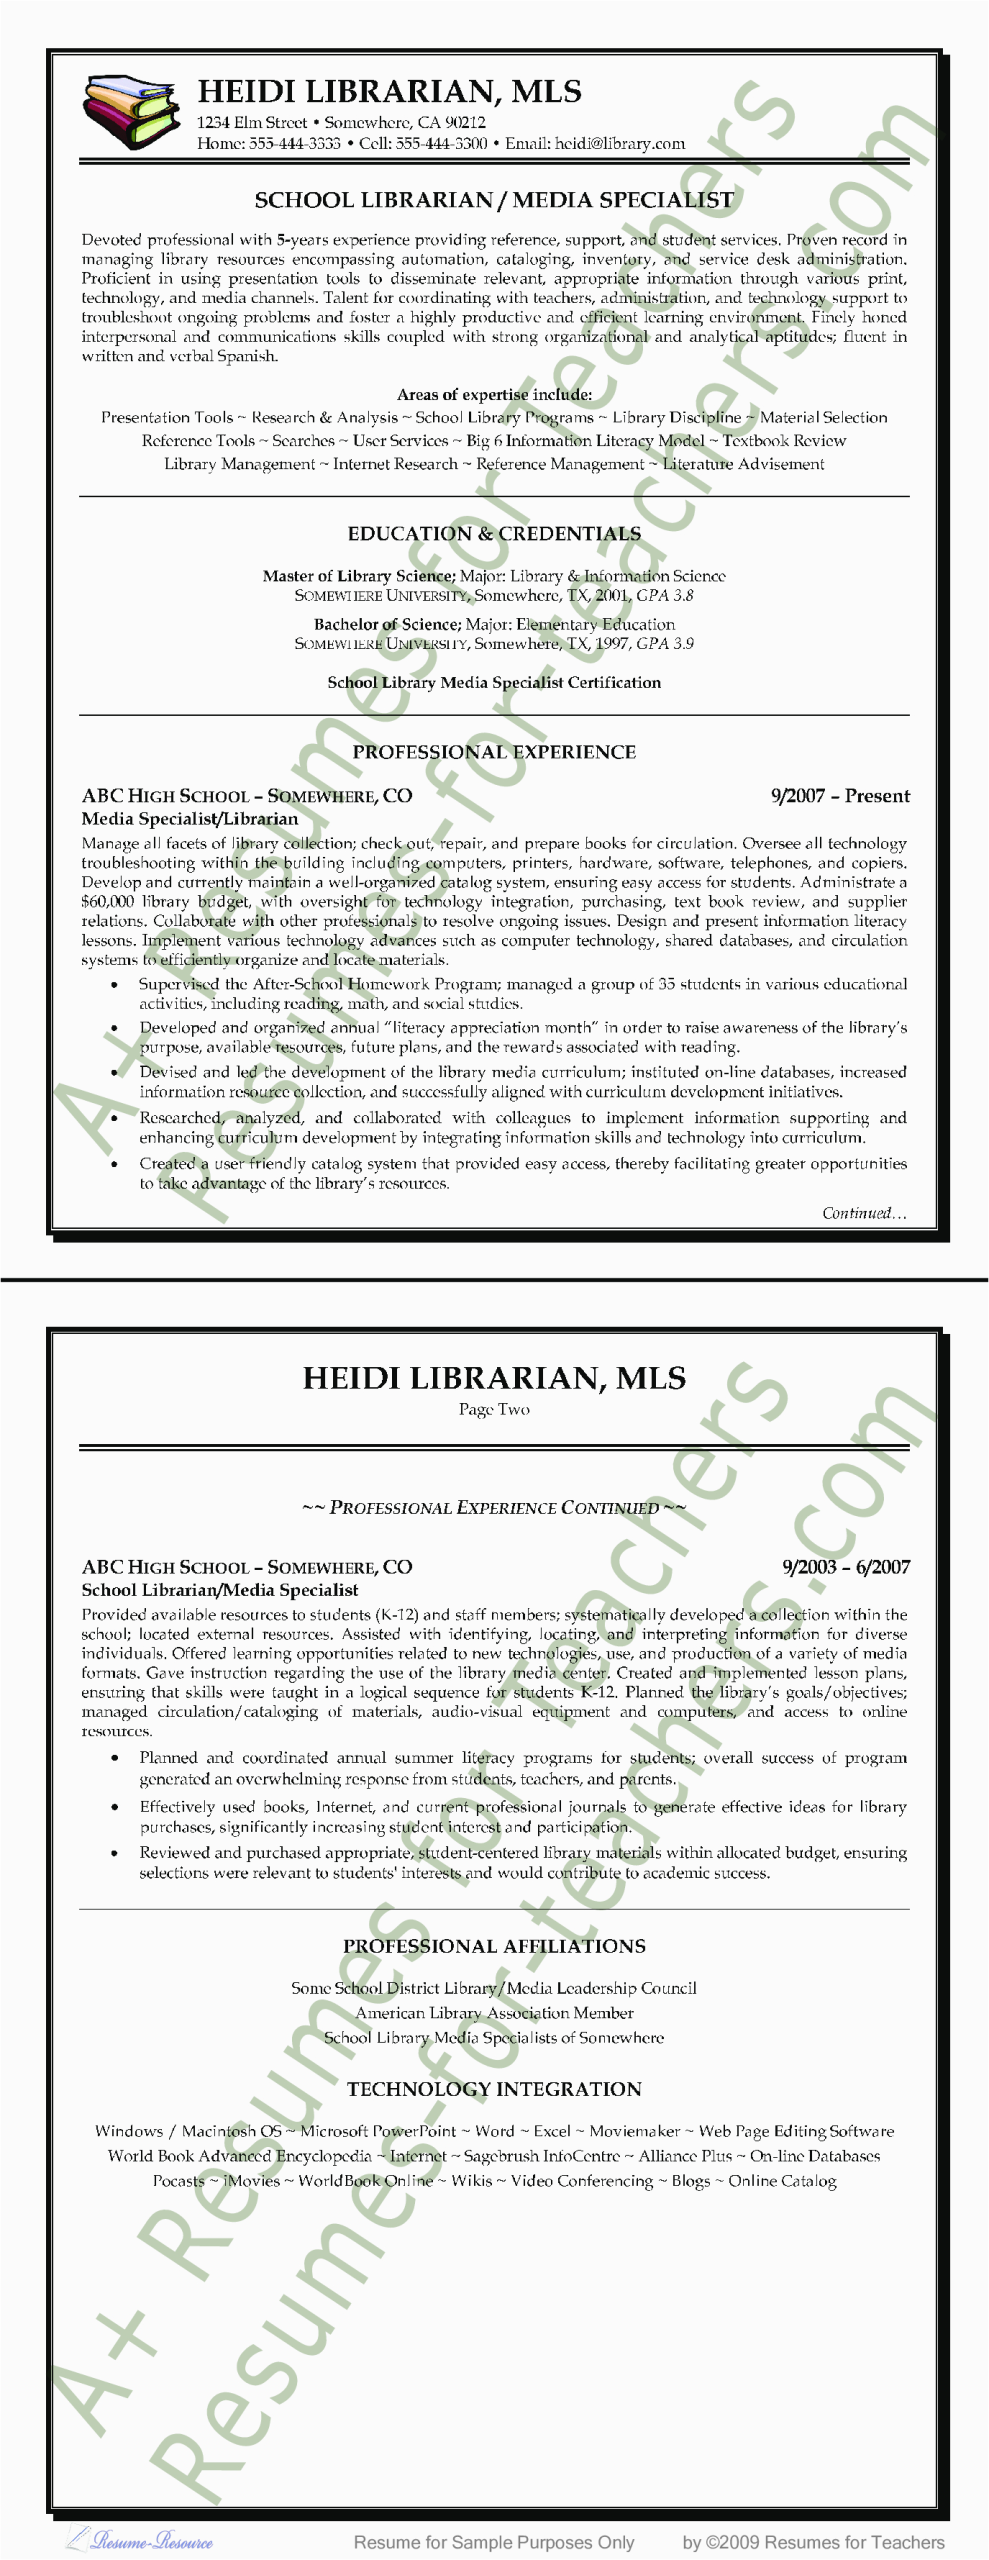 Sample Resume for School Media Specialist School Librarian & Media Specialist Resume